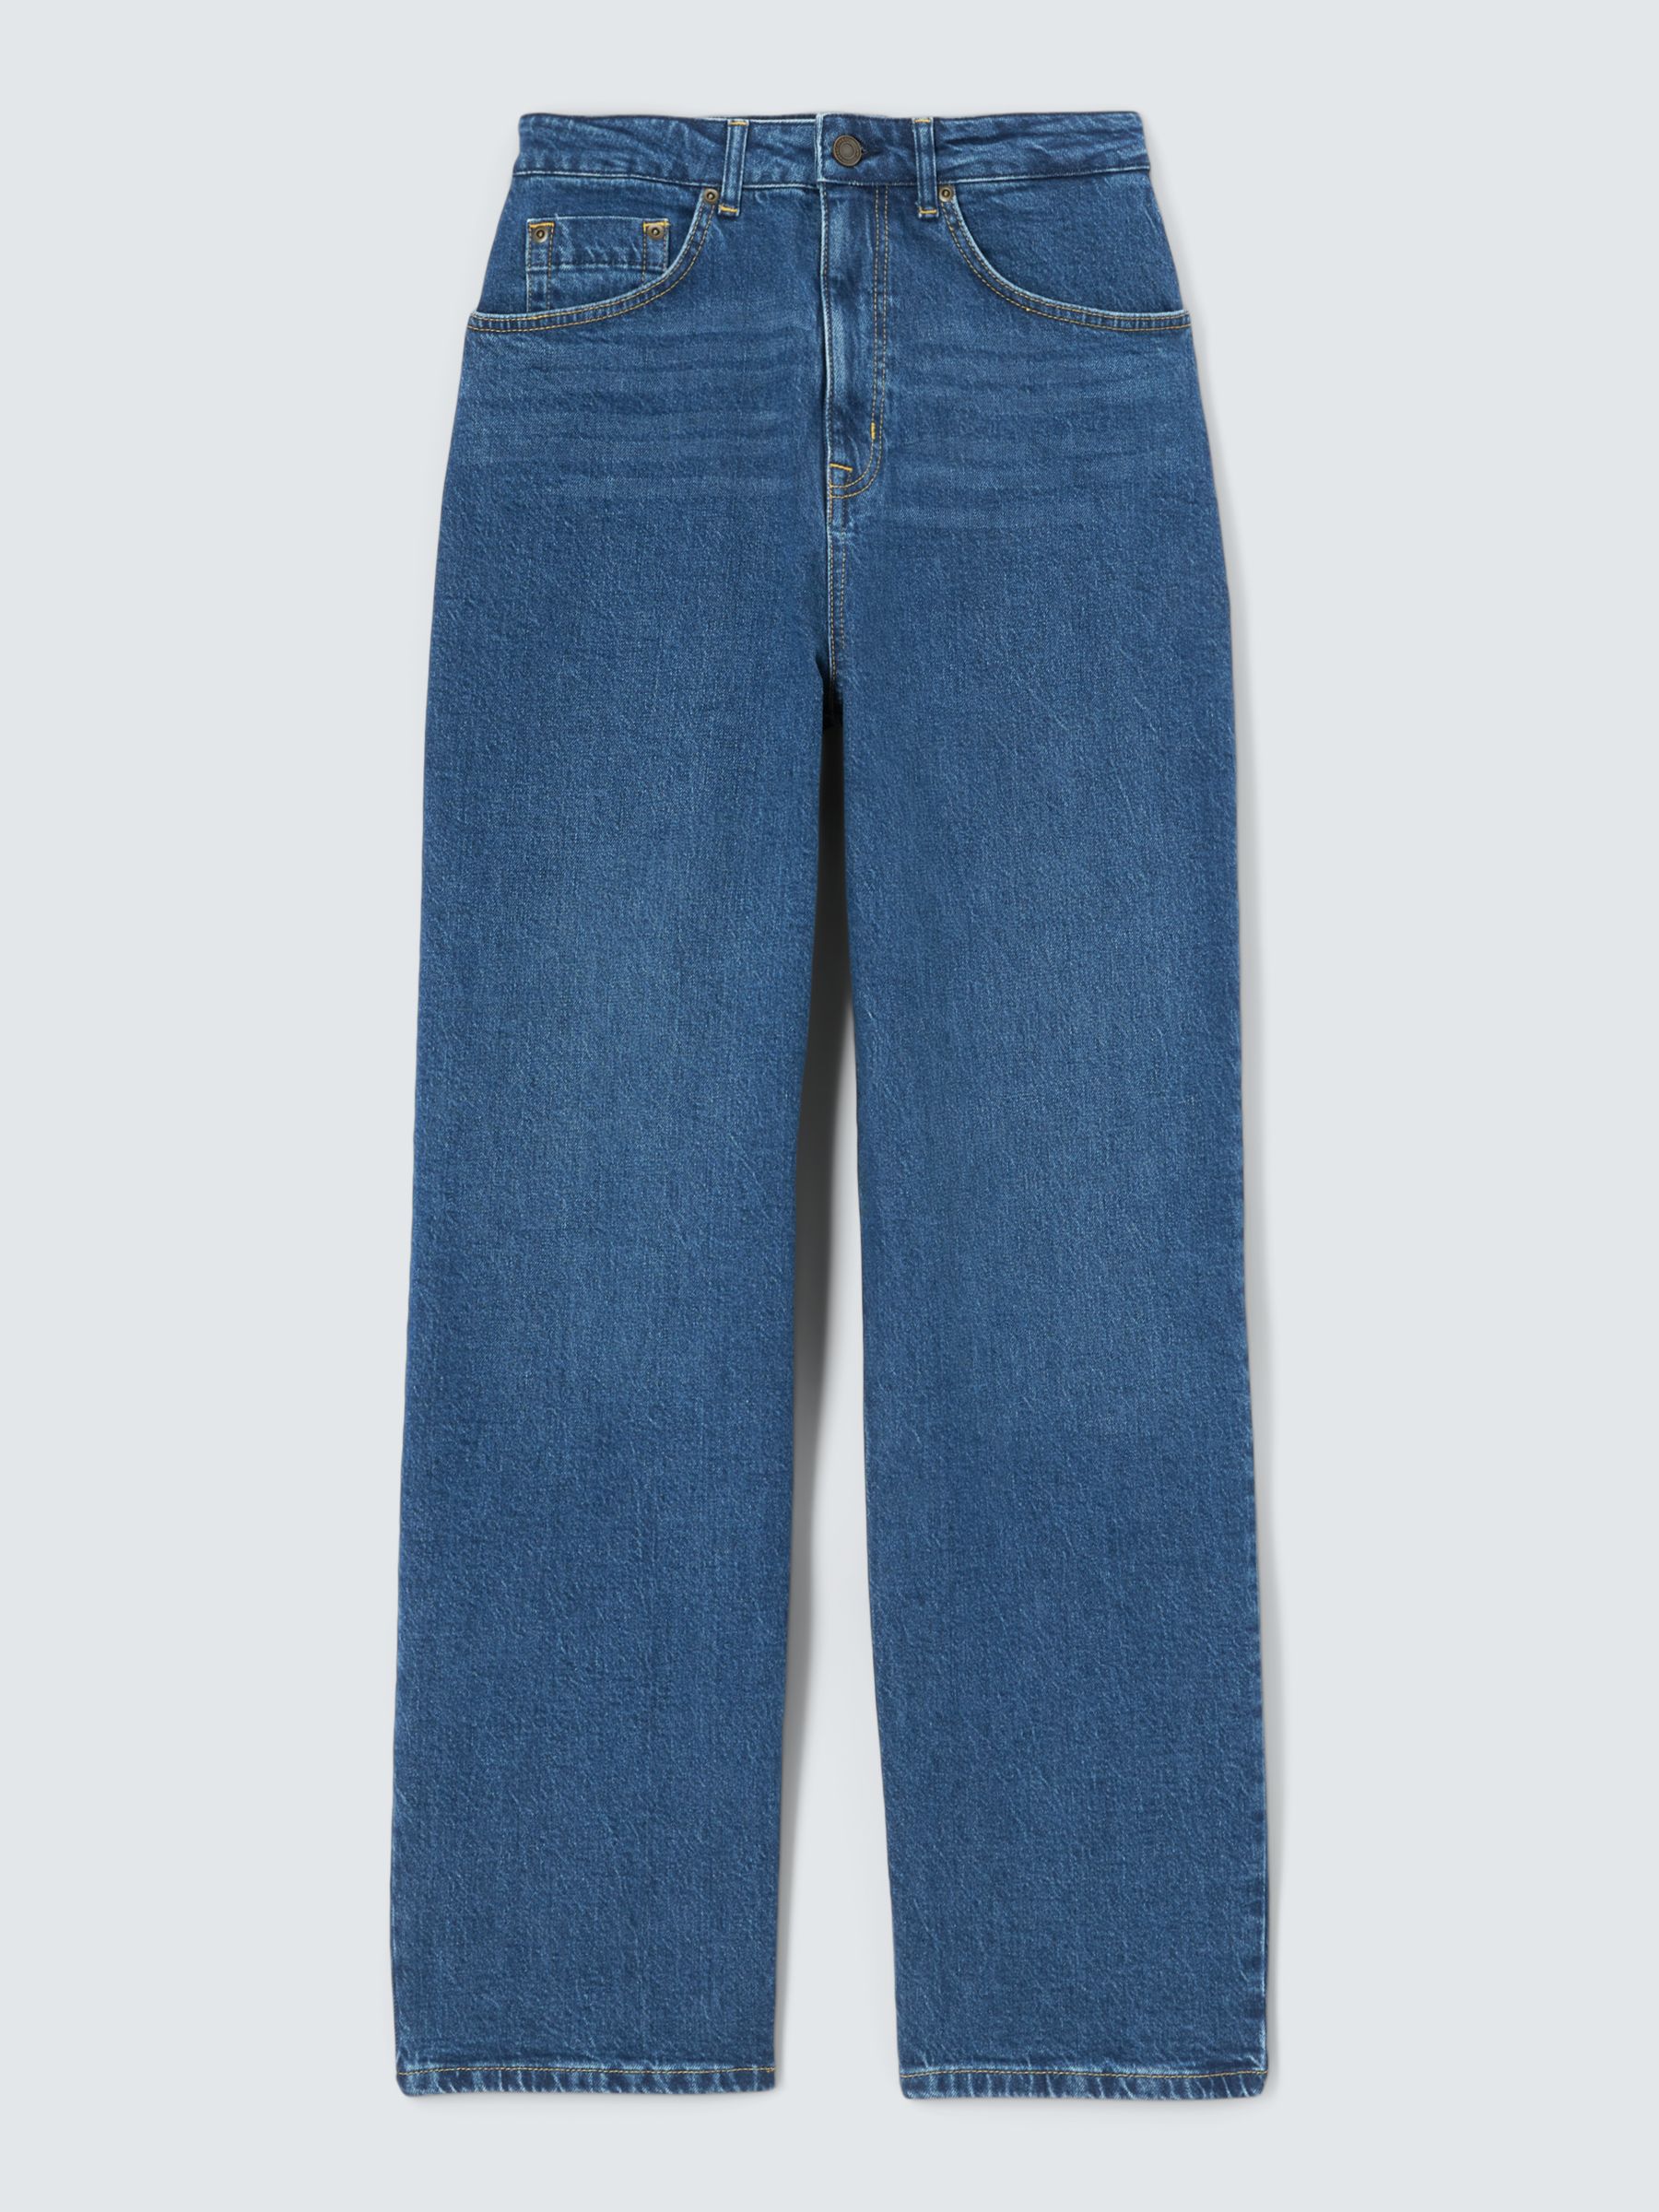 John Lewis Premium Straight Leg Jeans, Mid Wash, 10